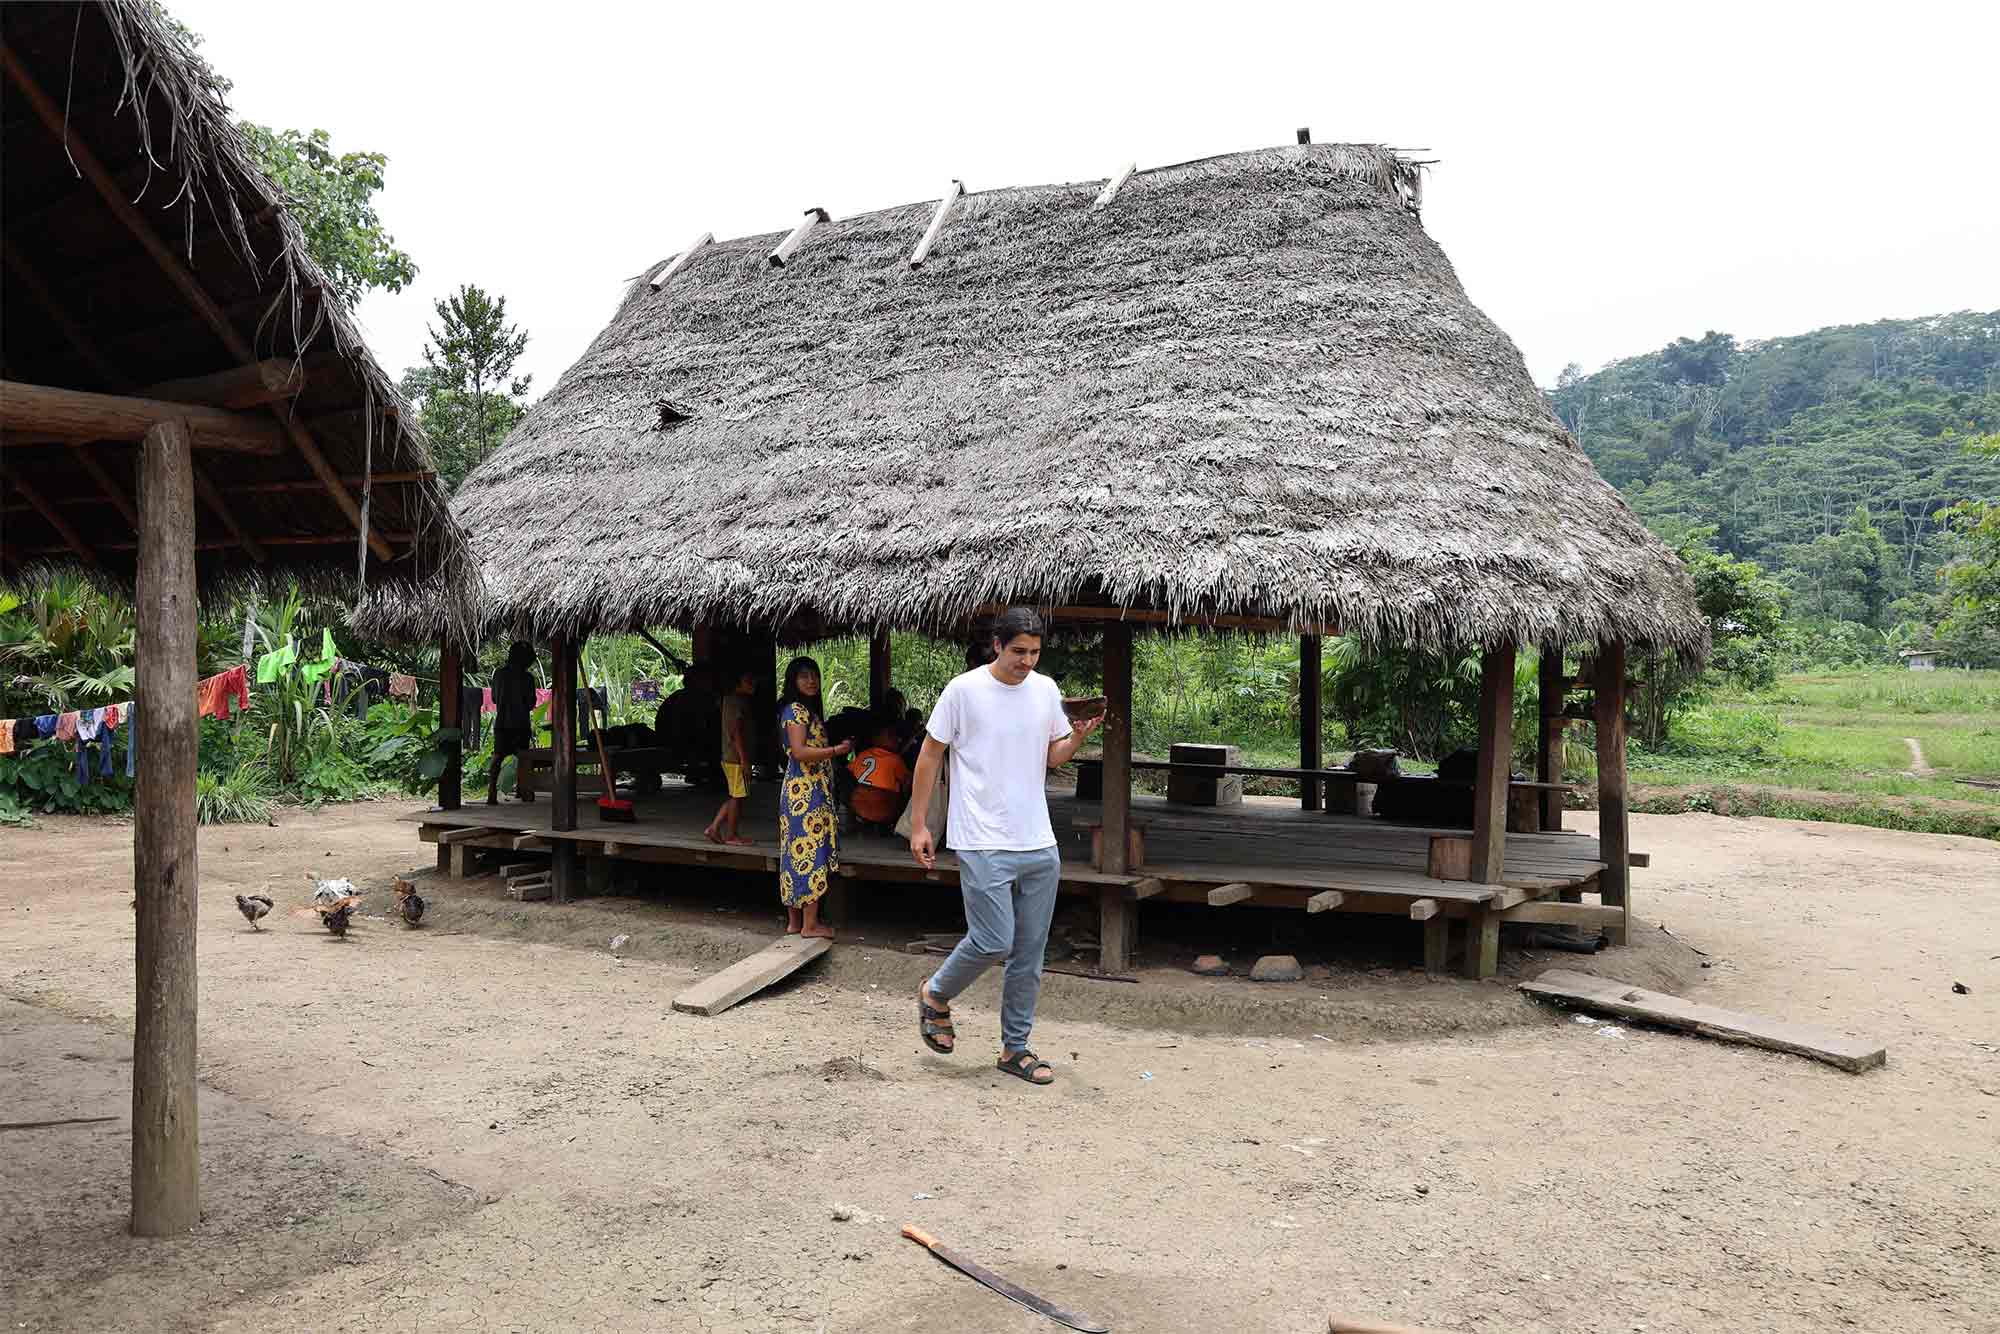 Jackson Khandelwal in front of hut in Ecuadorian village